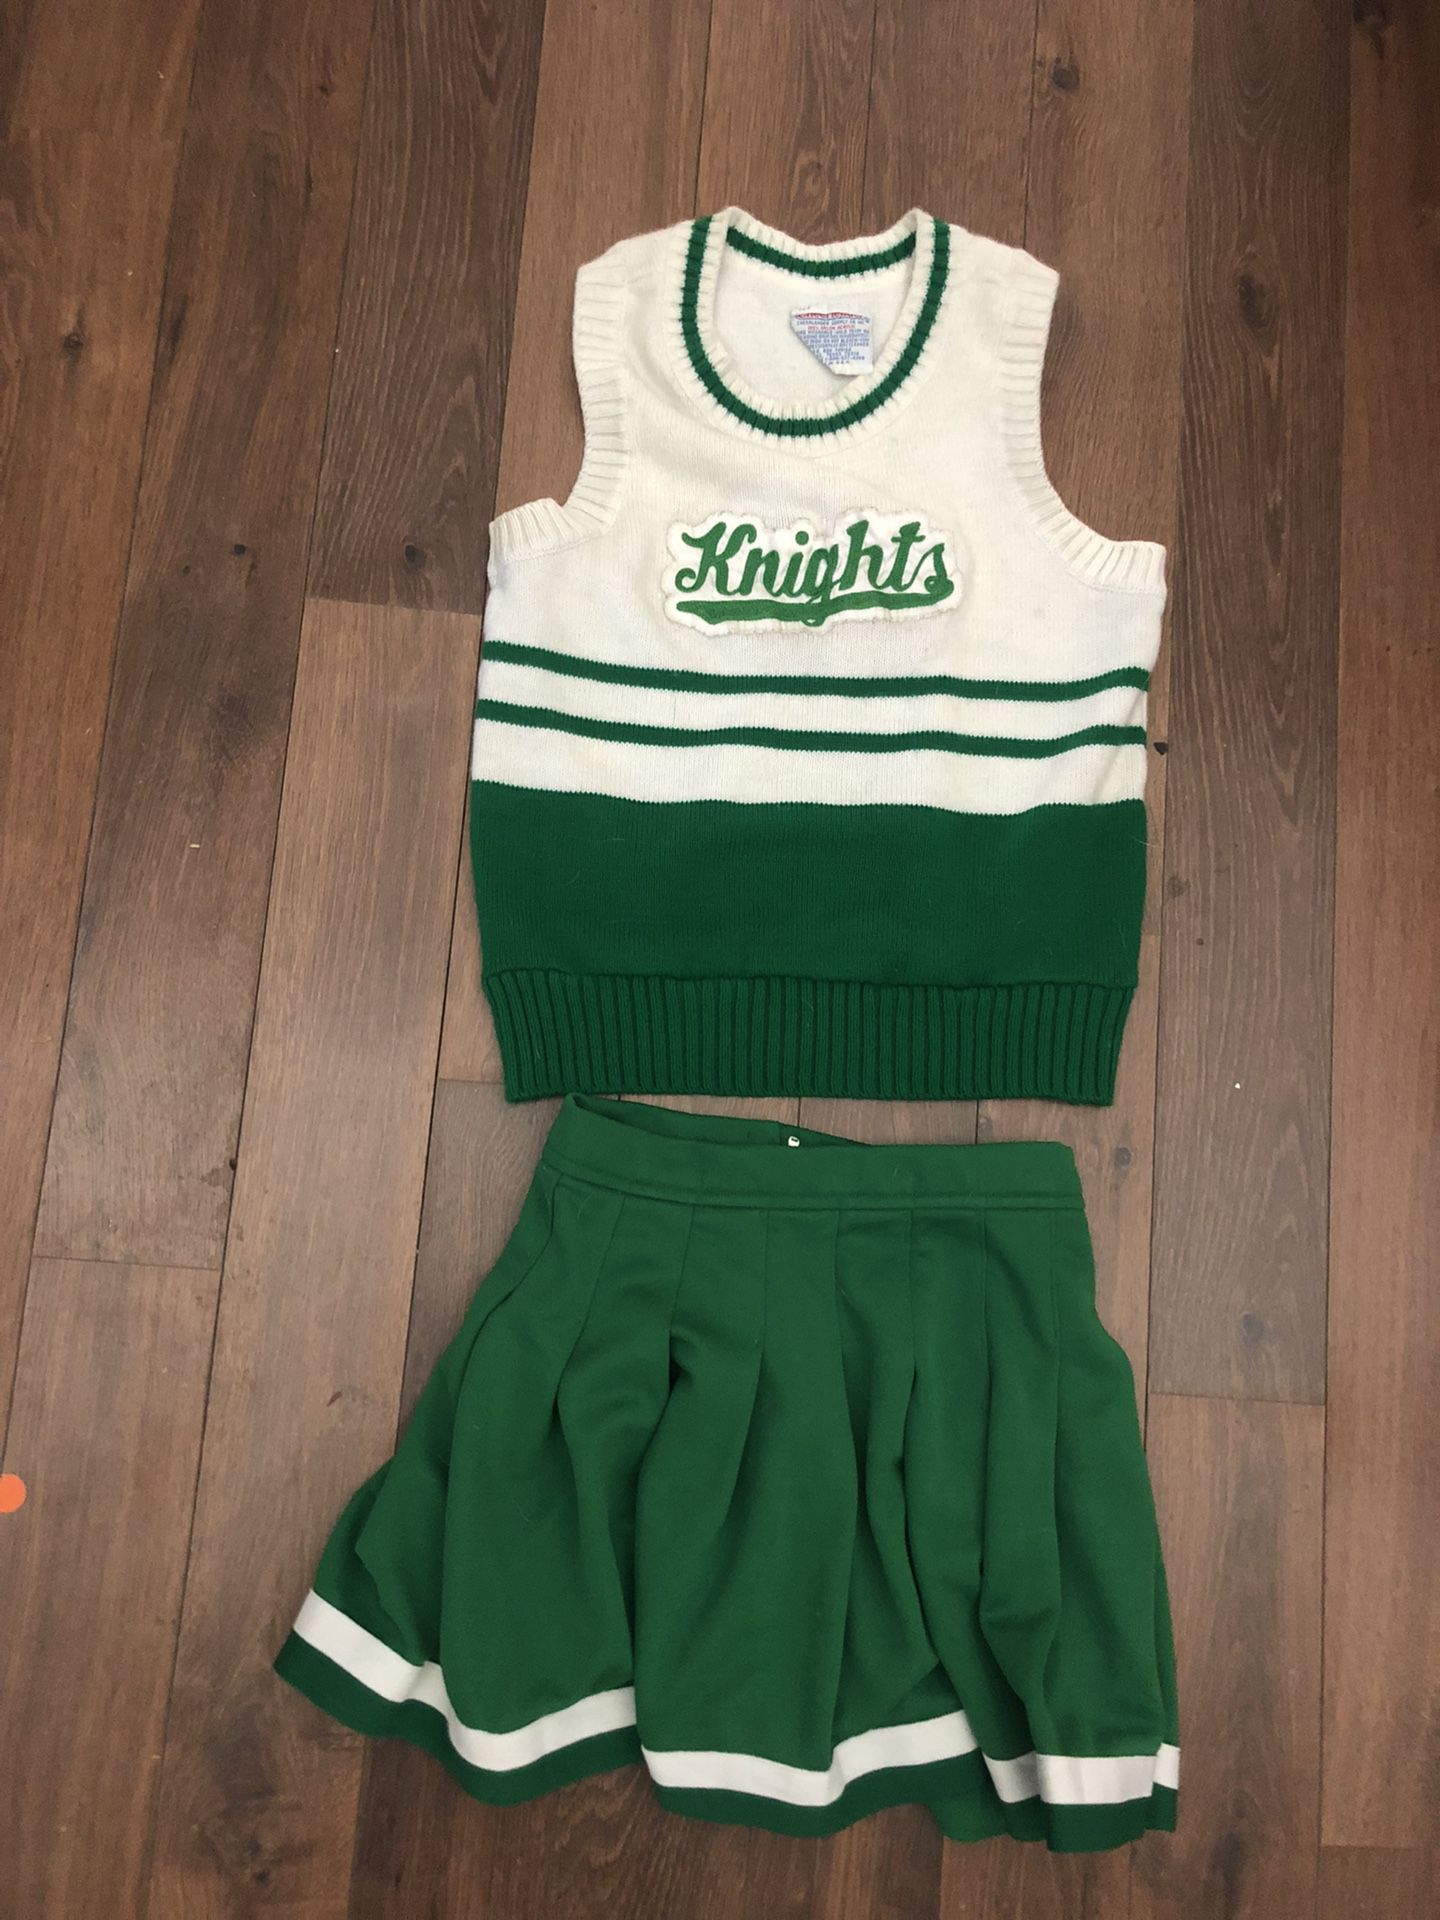 Vintage Cheerleading Costume - Women’s Small 